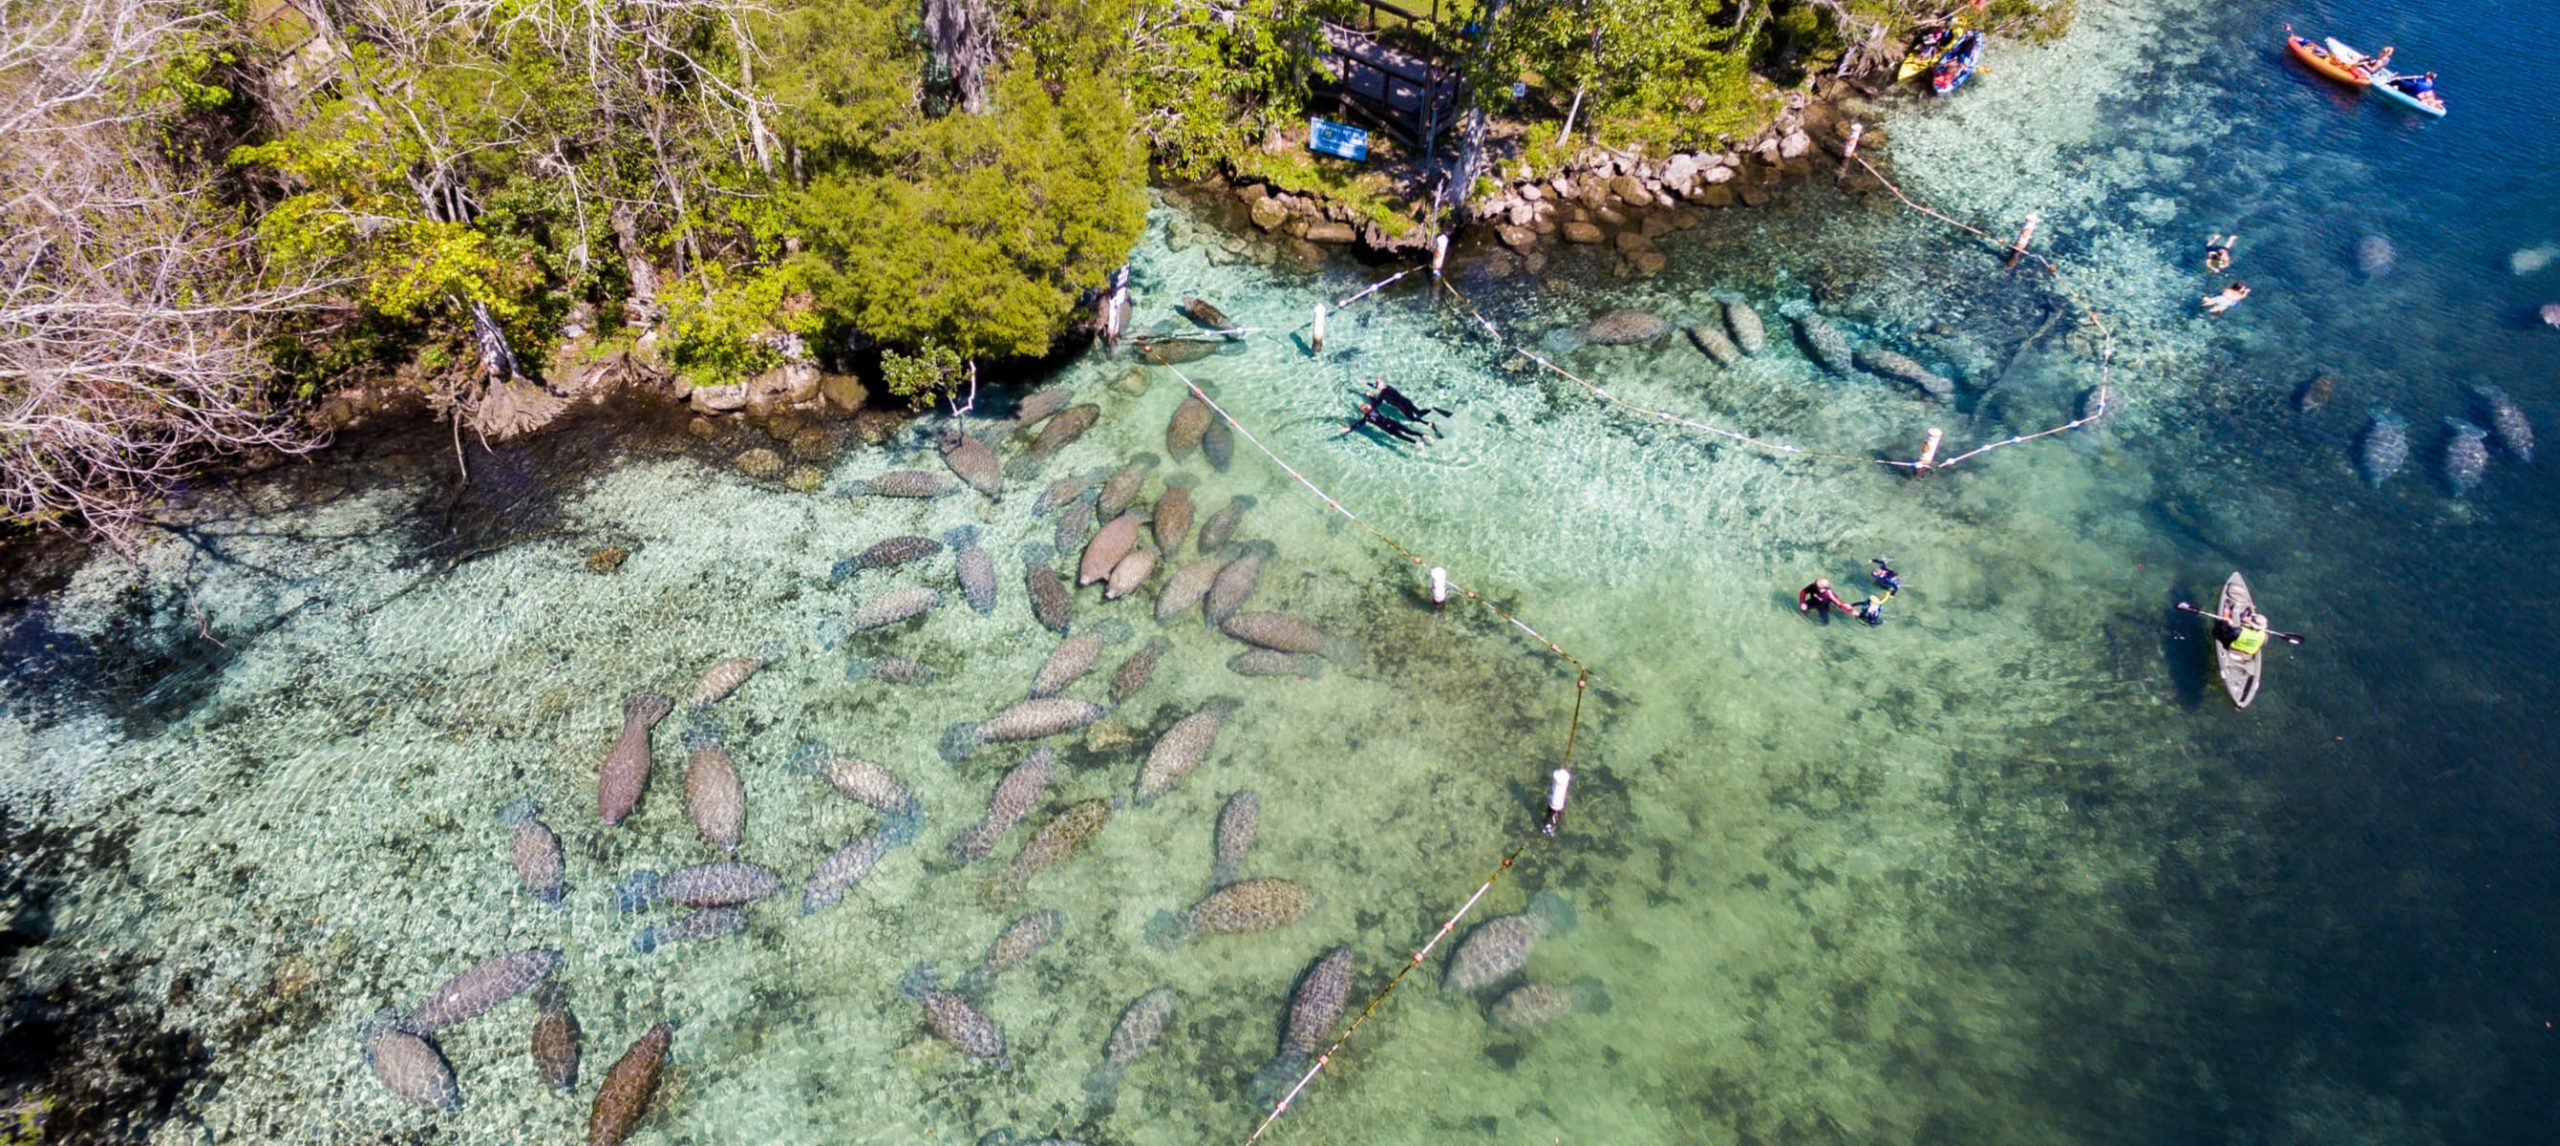 Swimming with manatees at Crystal River, FL